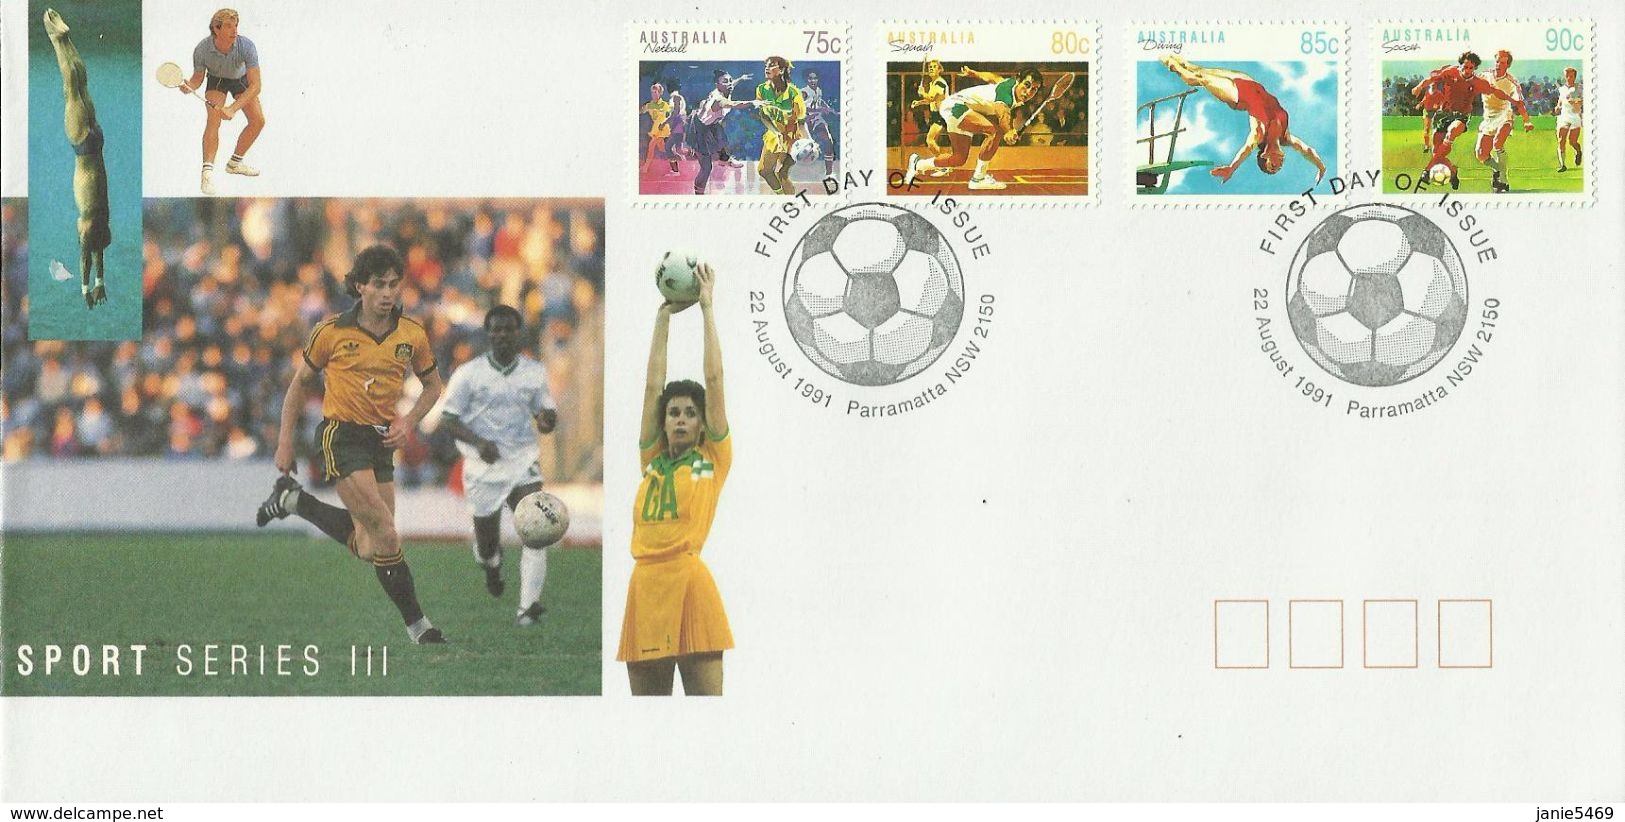 Australia 1991 Sports Series III FDC - FDC